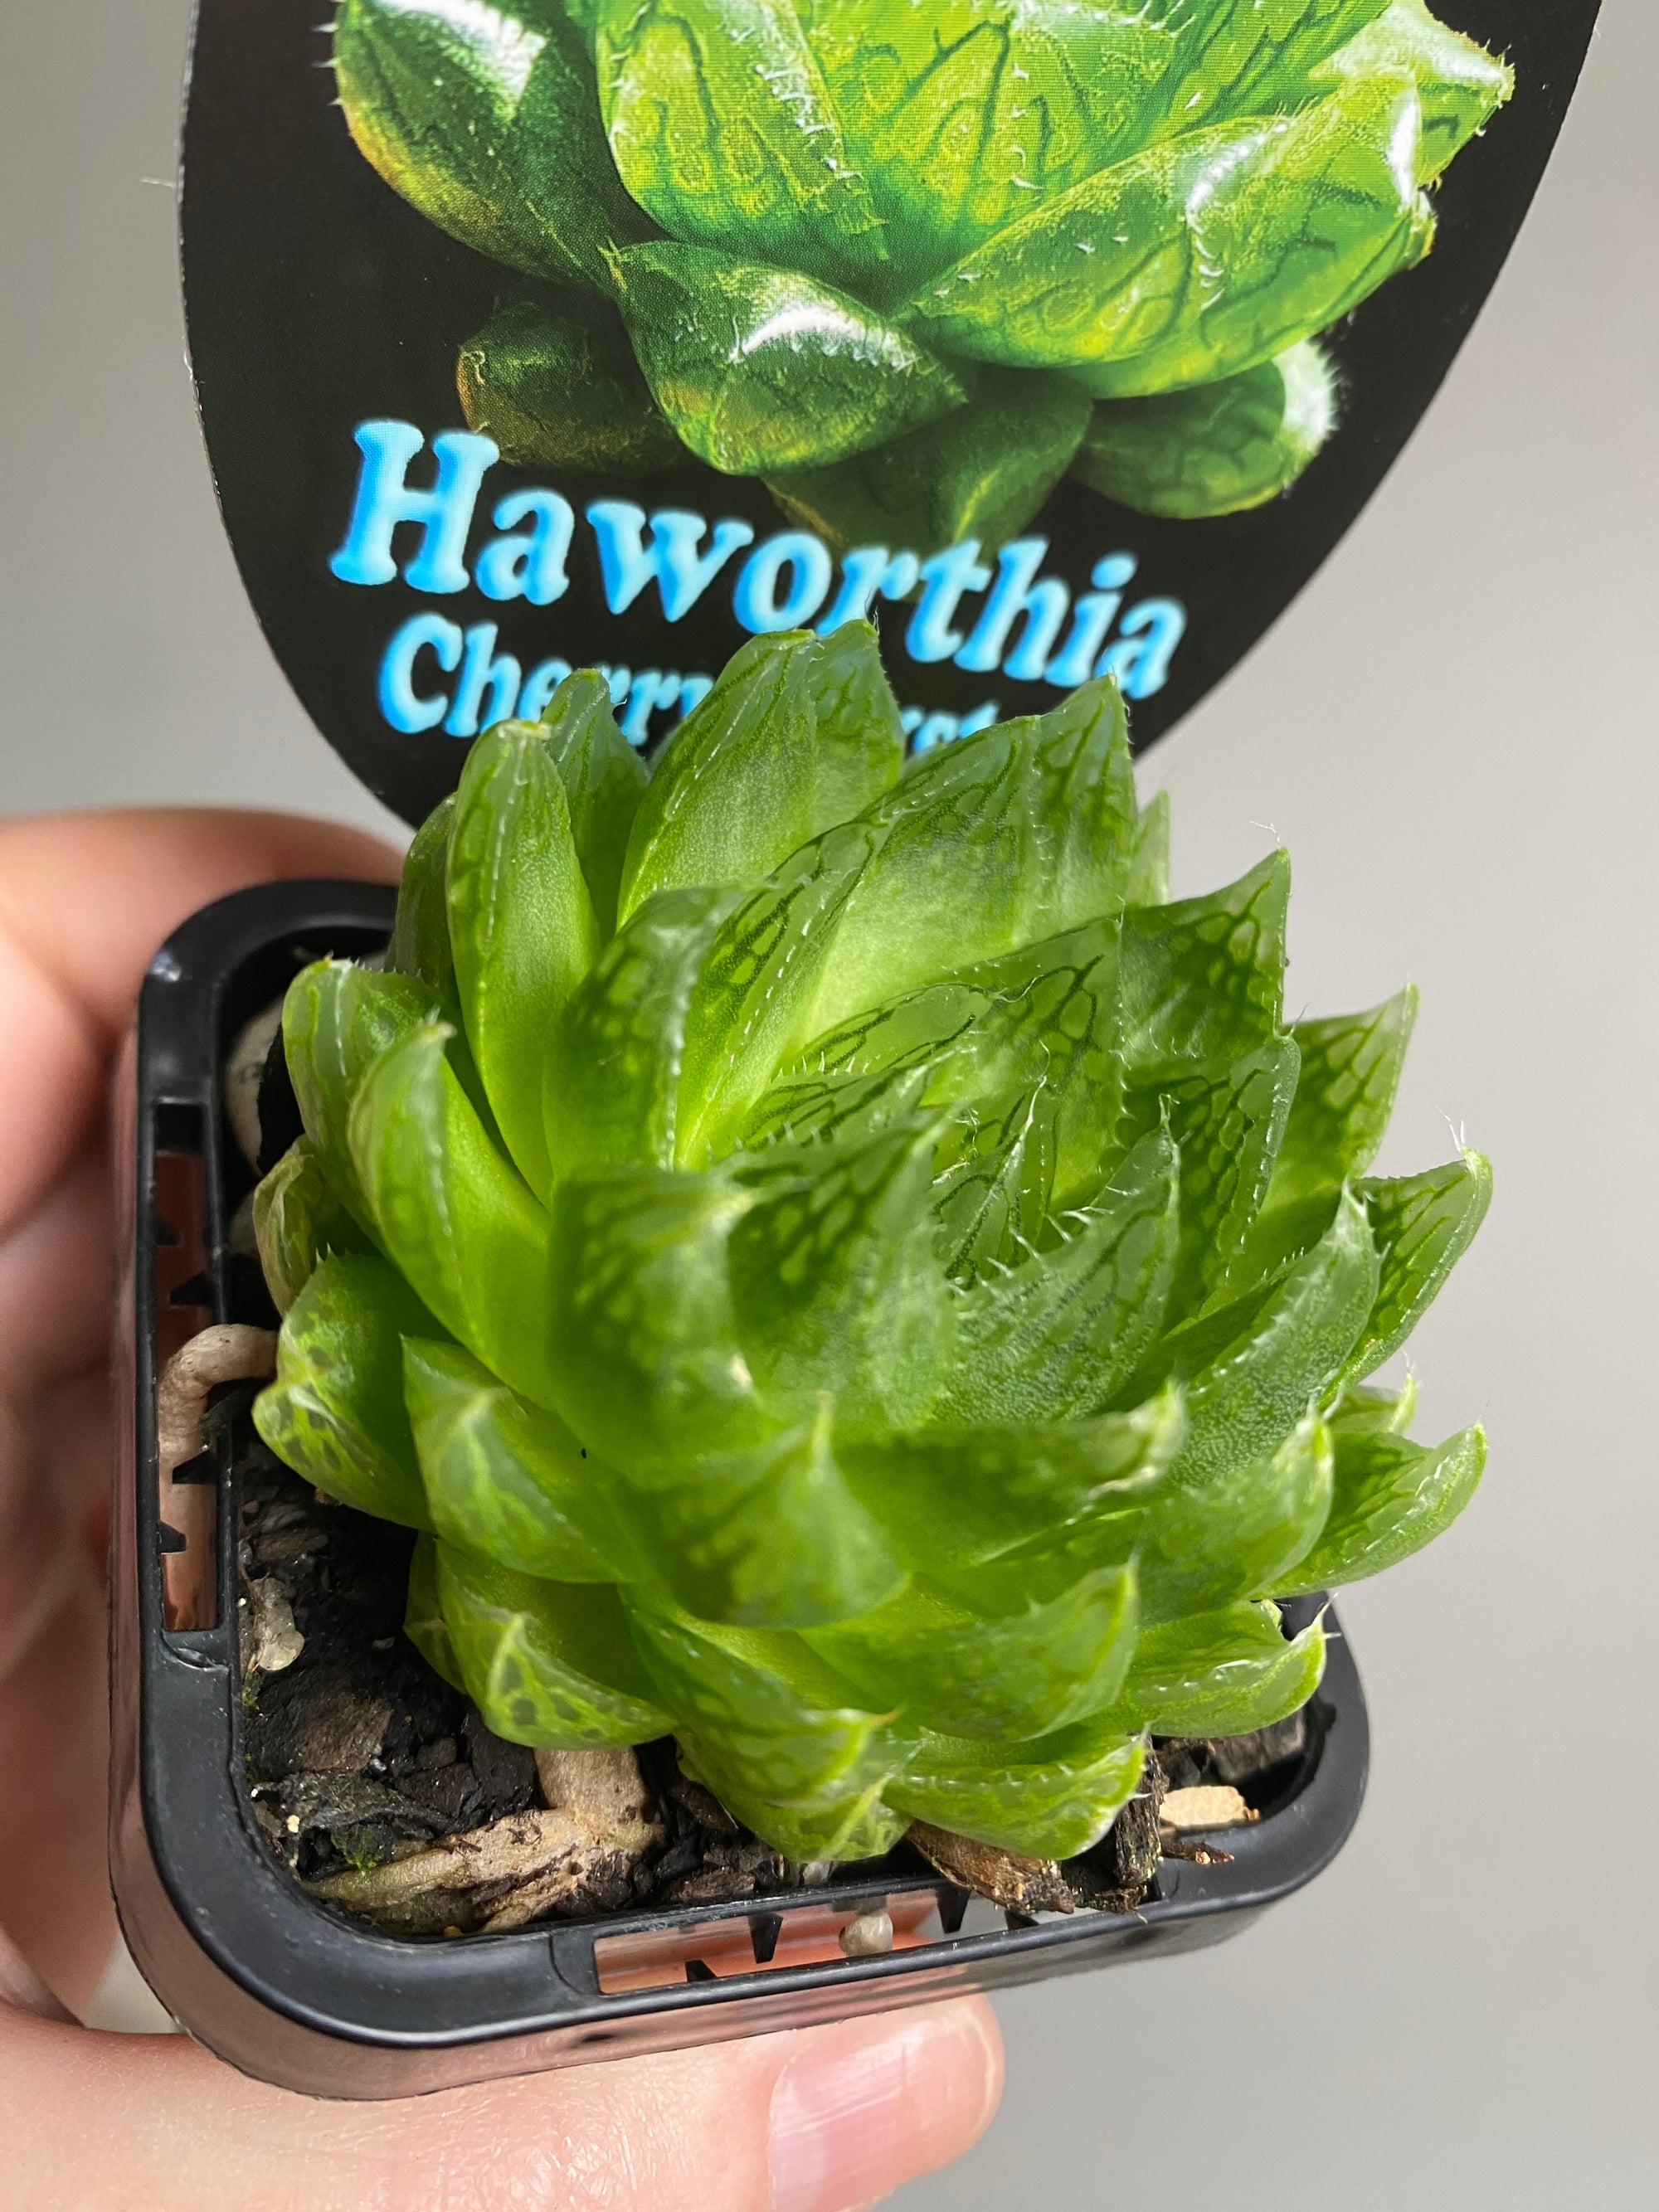 Haworthia Cherry Crystal